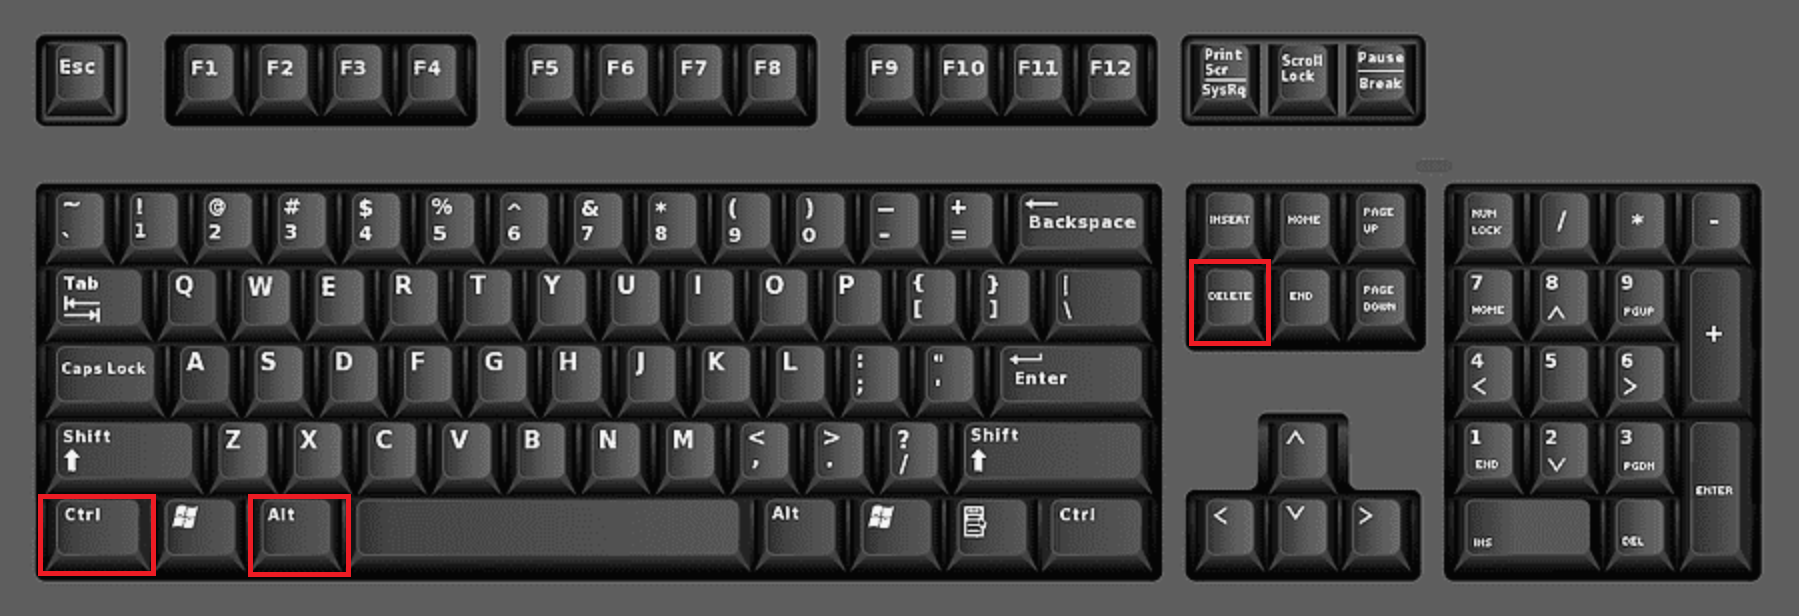 Enter формы. Клавиша Numpad 1. Numpad 1 на клавиатуре. Контрол шифт на клавиатуре. Numpad 5 на клавиатуре.